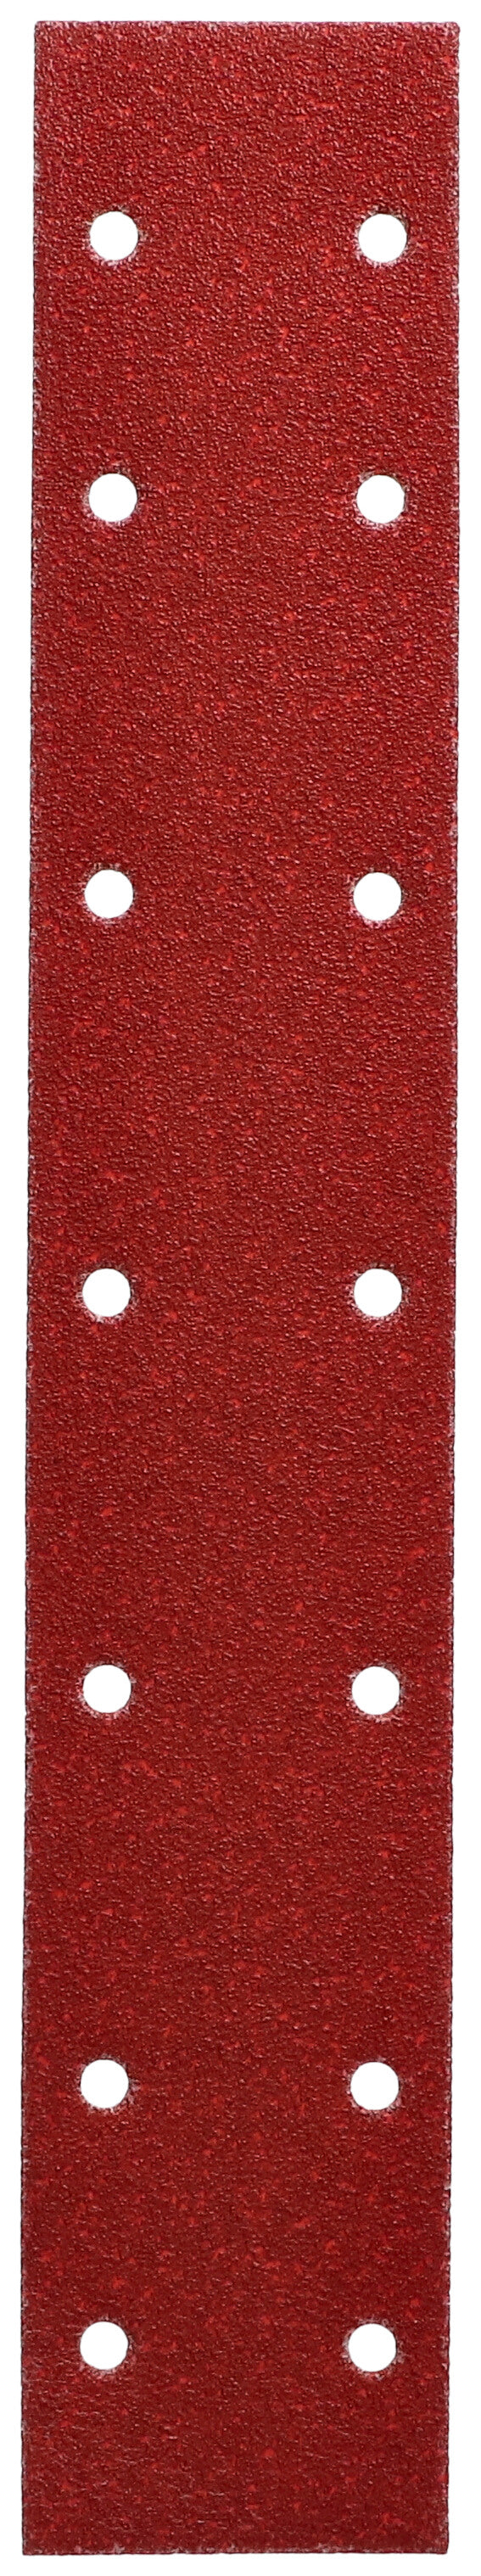 FINIXA Sanding strip 70mm x 420mm - 14 holes